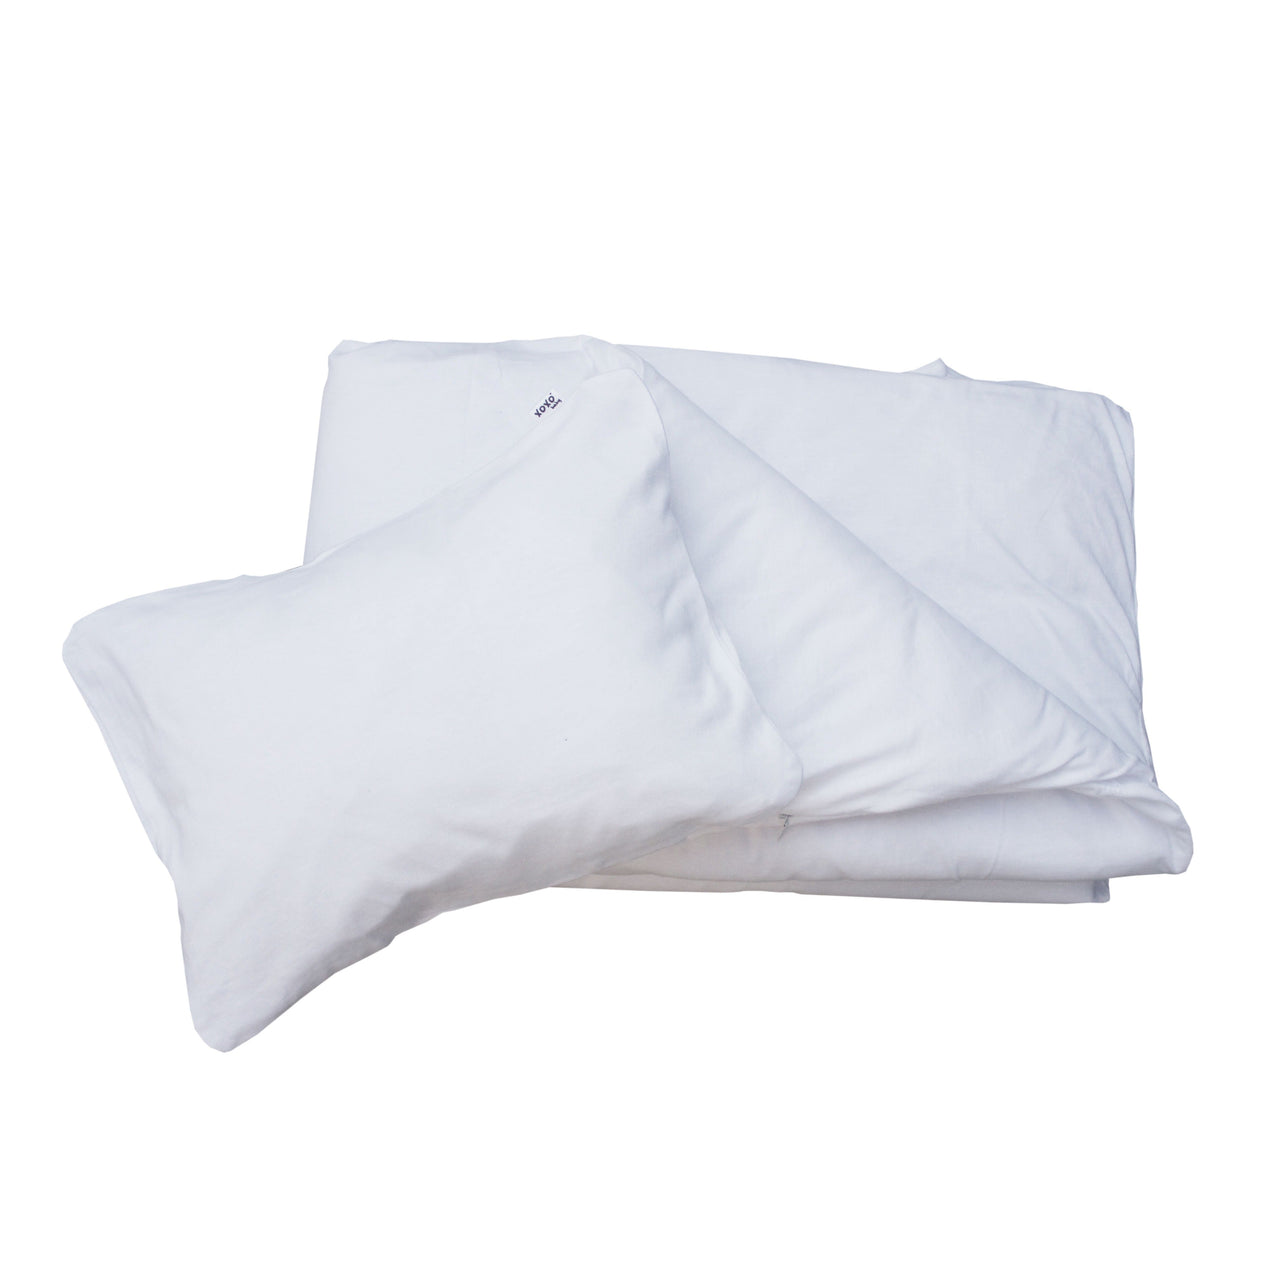 Duvet Cover and Pillowcase - Plain White